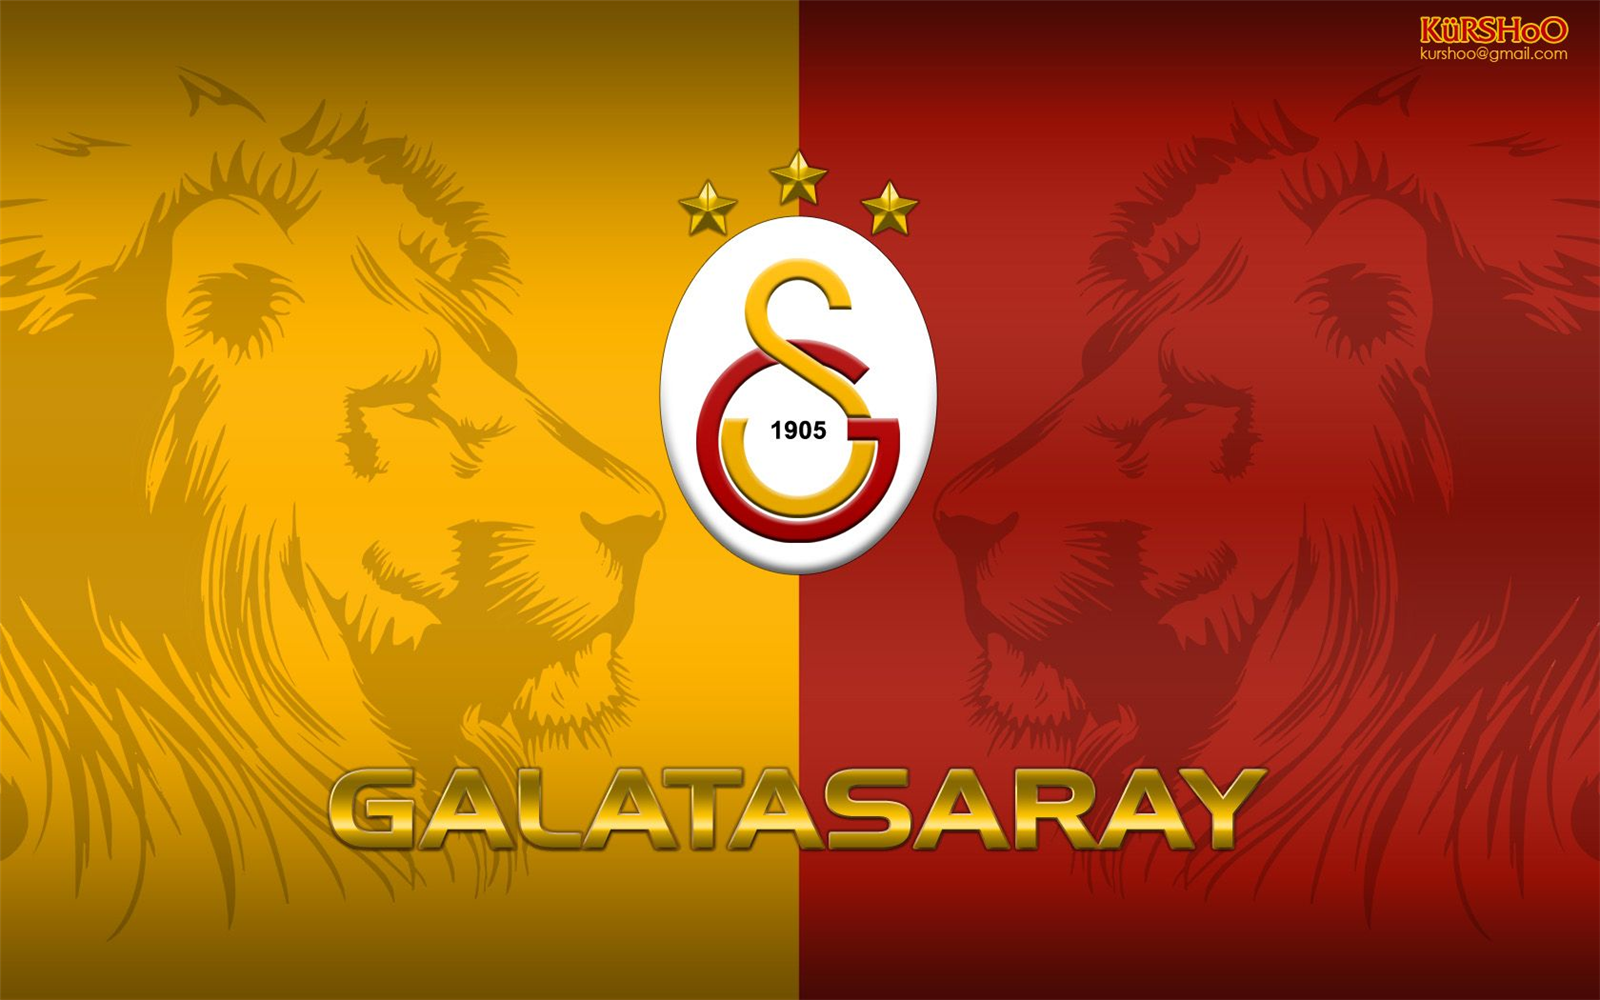 galatasaray hd wallpaper,lion,logo,text,font,graphics